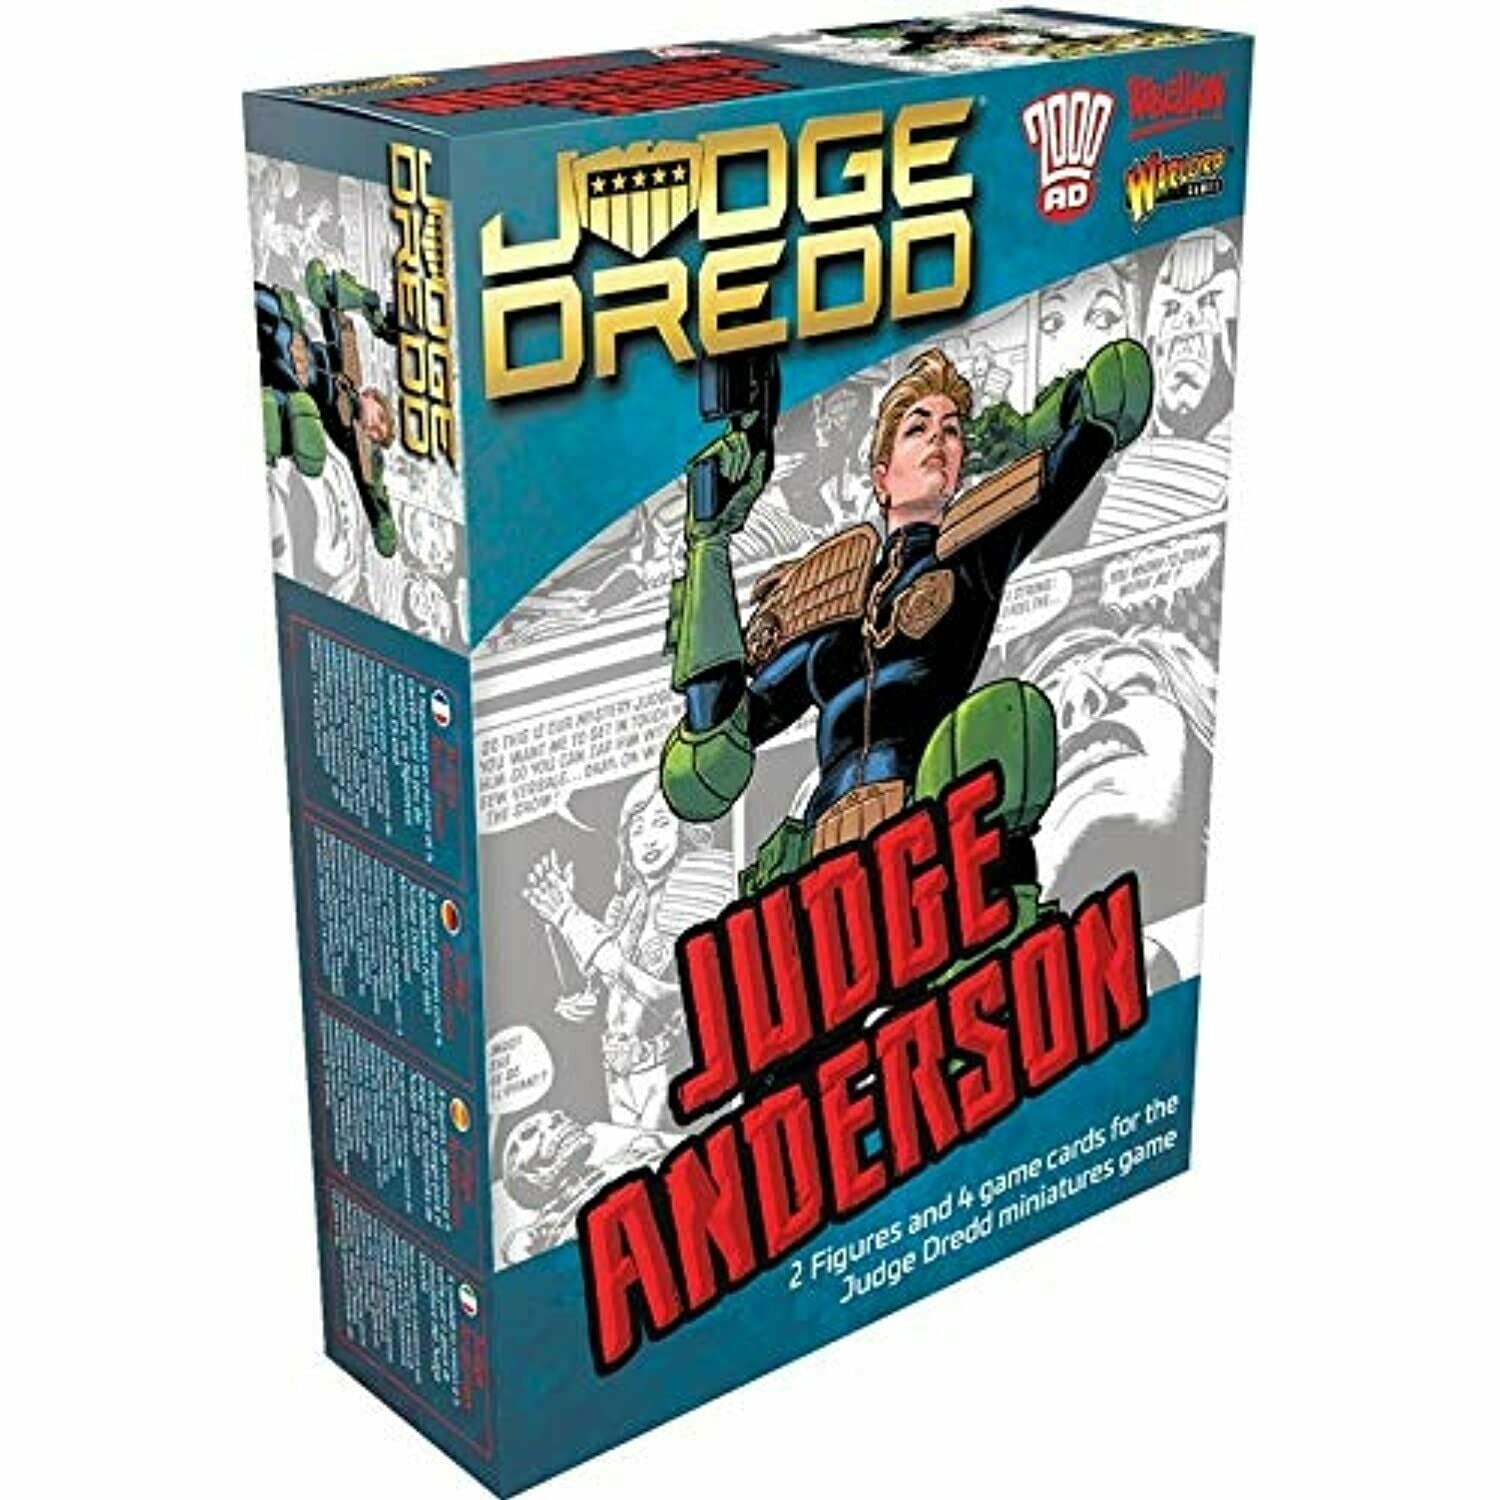 Dredd Judge Anderson